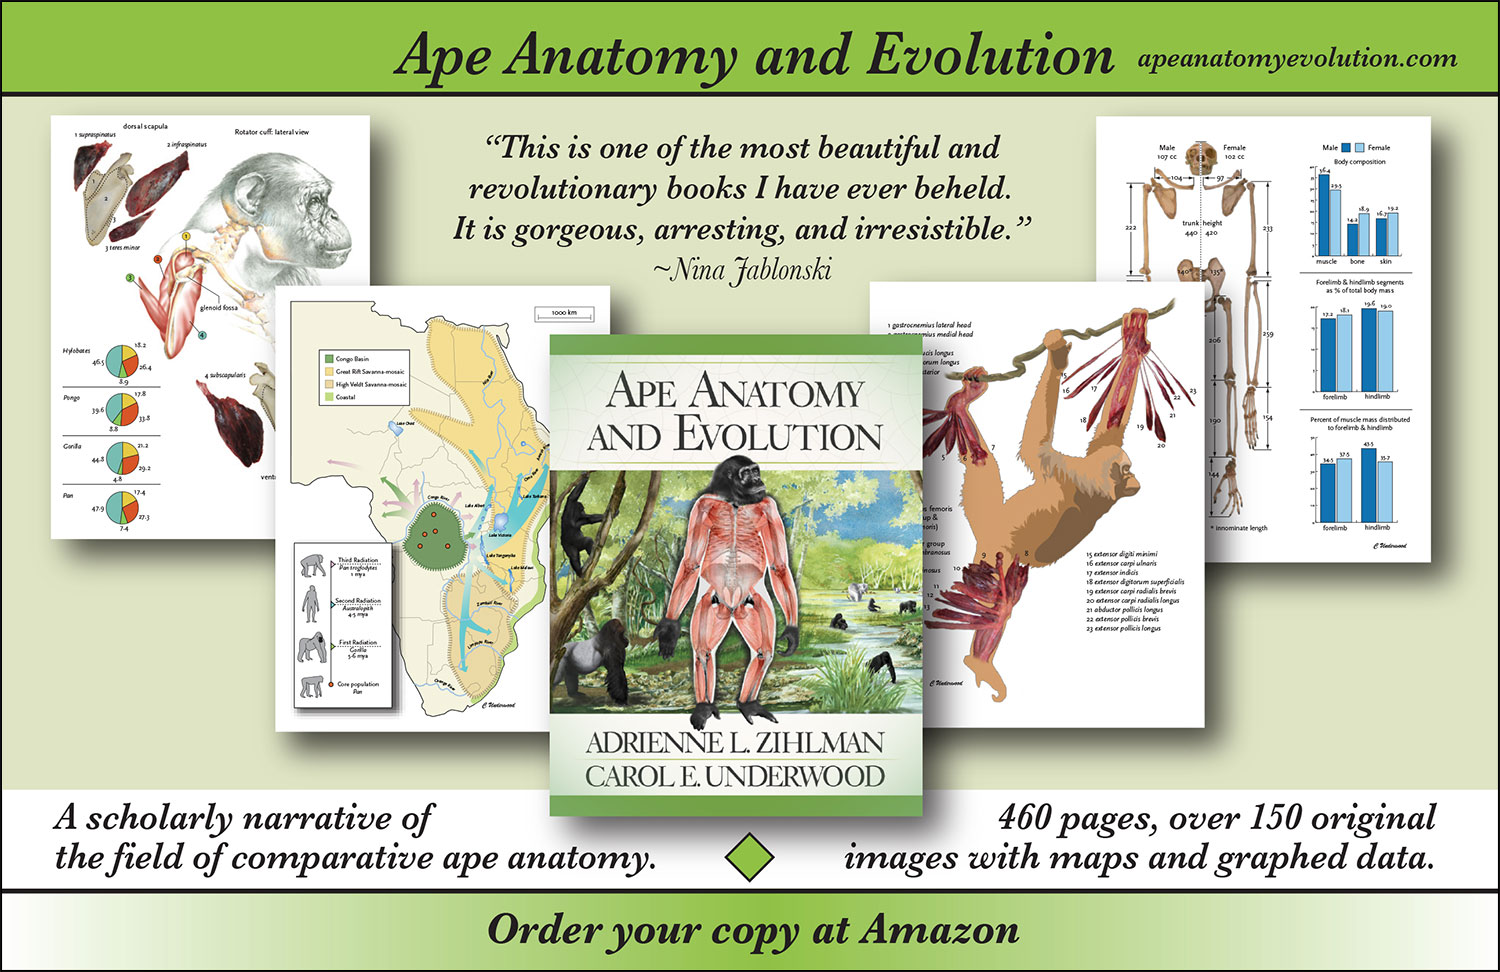 Ape Anatomy and Evolution postcard